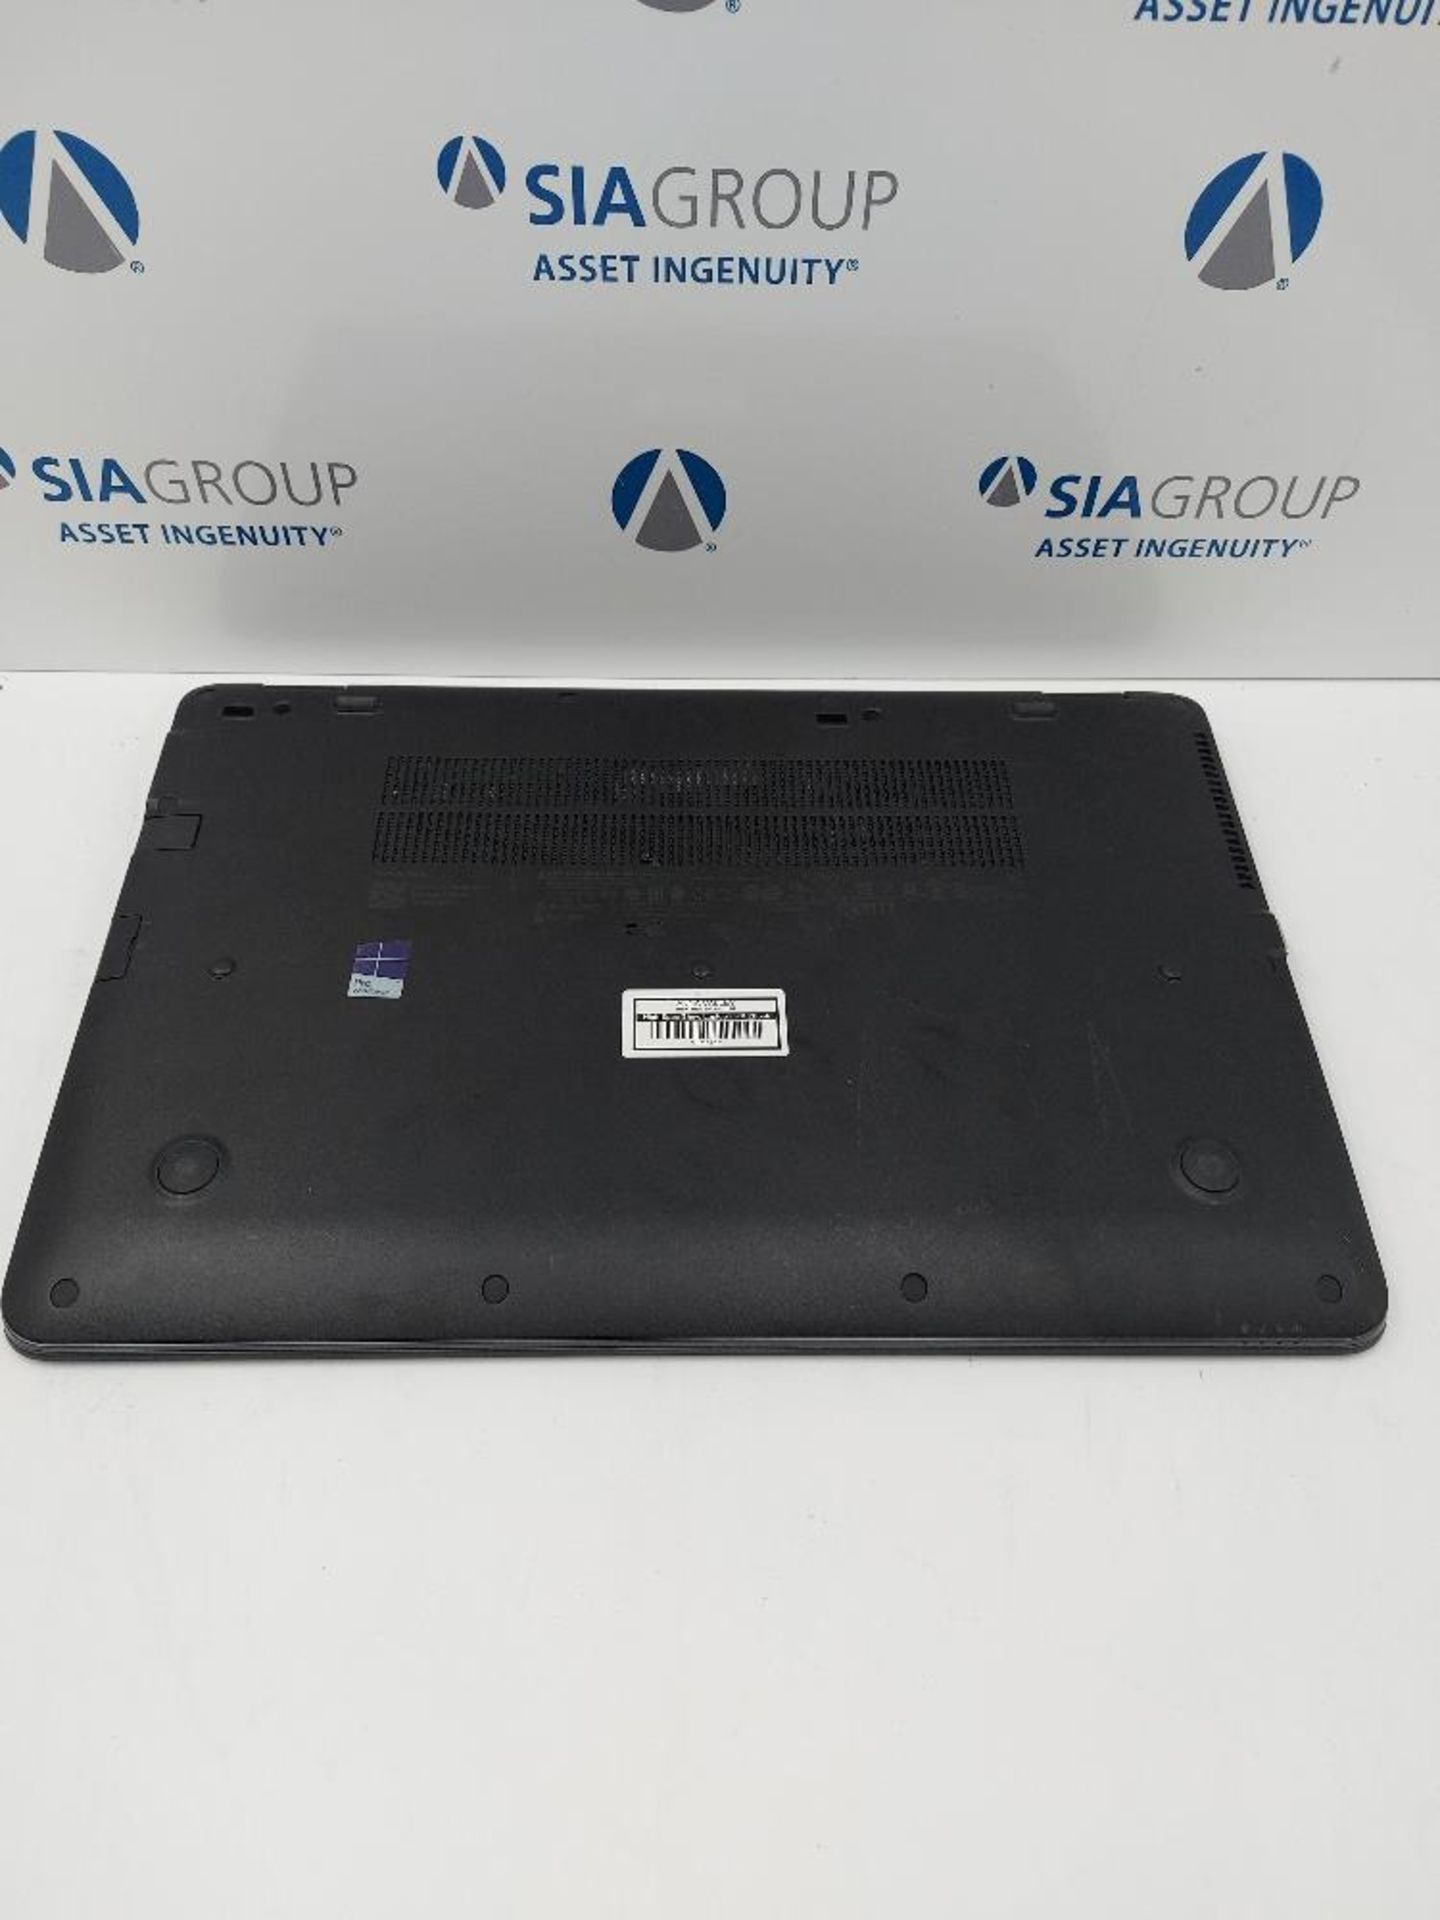 HP Zbook 15u G3 Laptop with Flight Case - Image 5 of 11